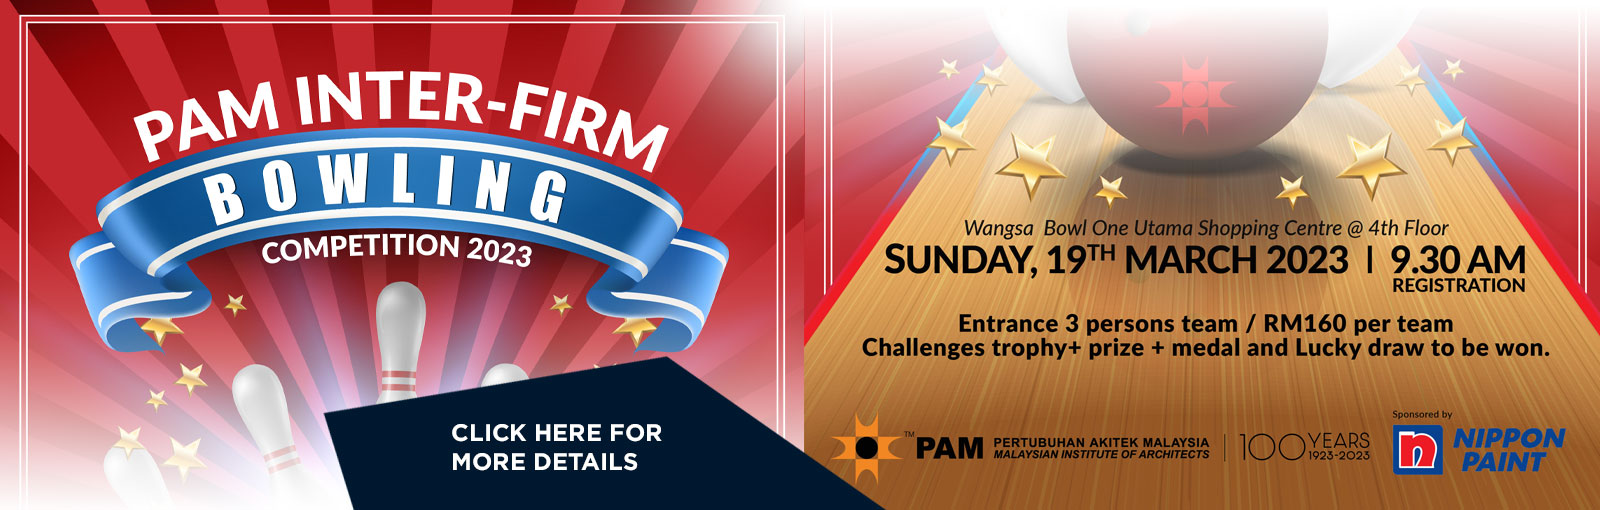 PAM Inter-Firm Bowling 2023